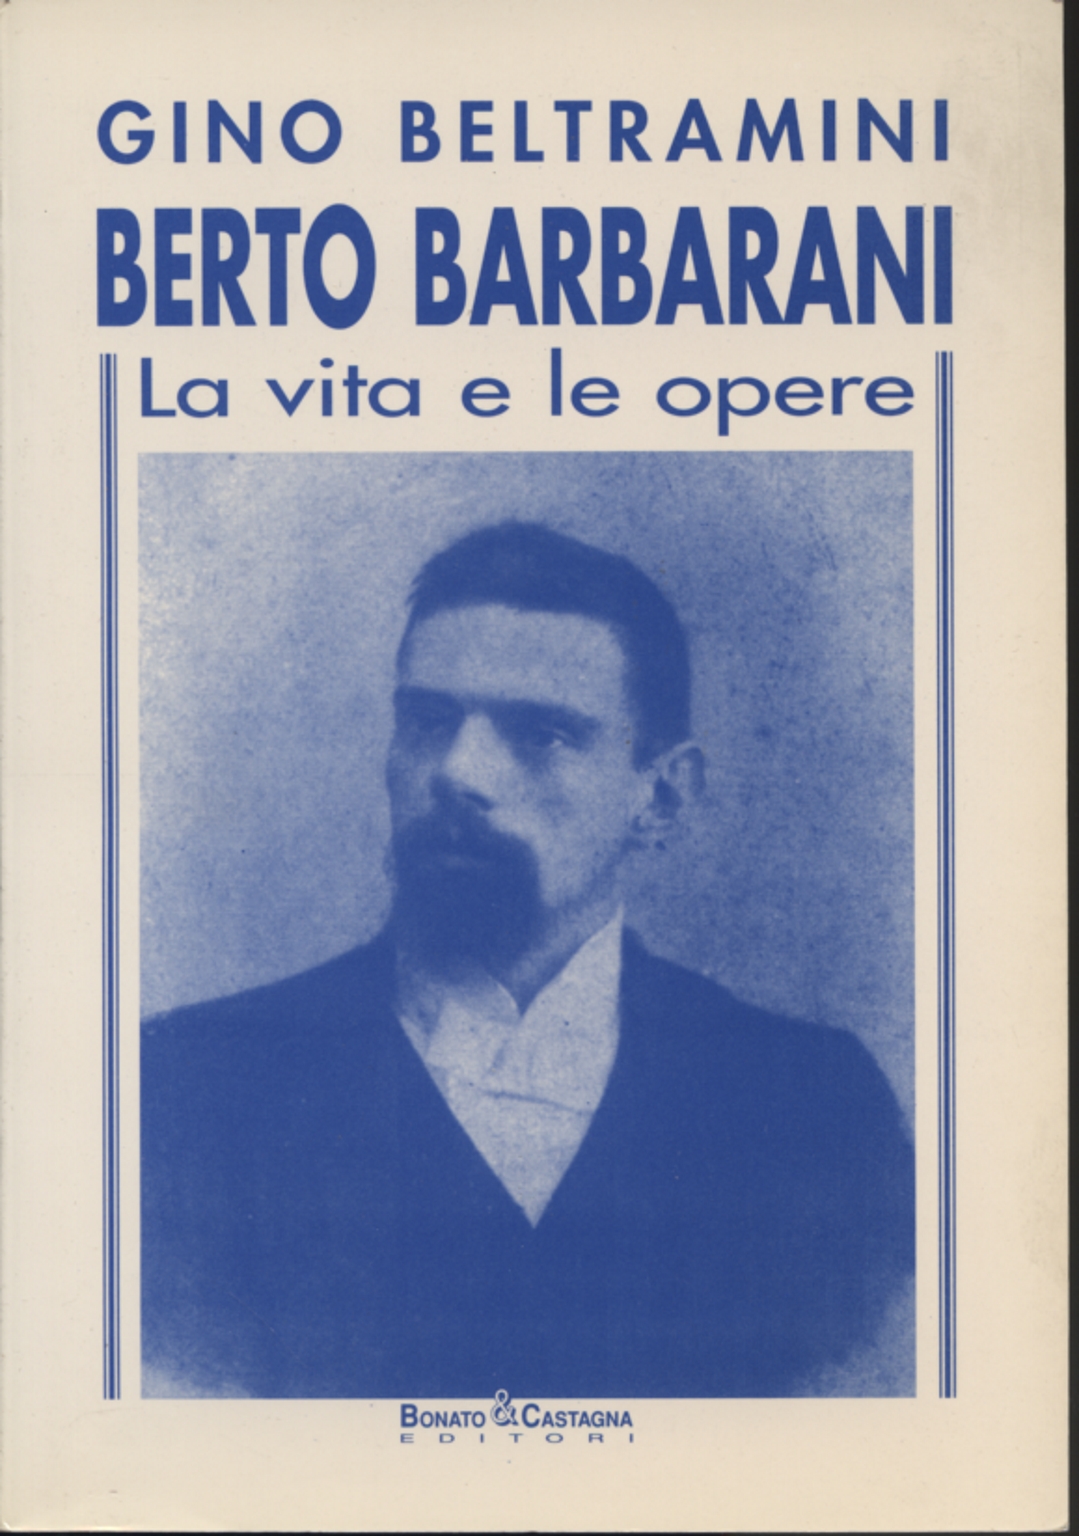 Berto Barbarani, Gino Beltramini